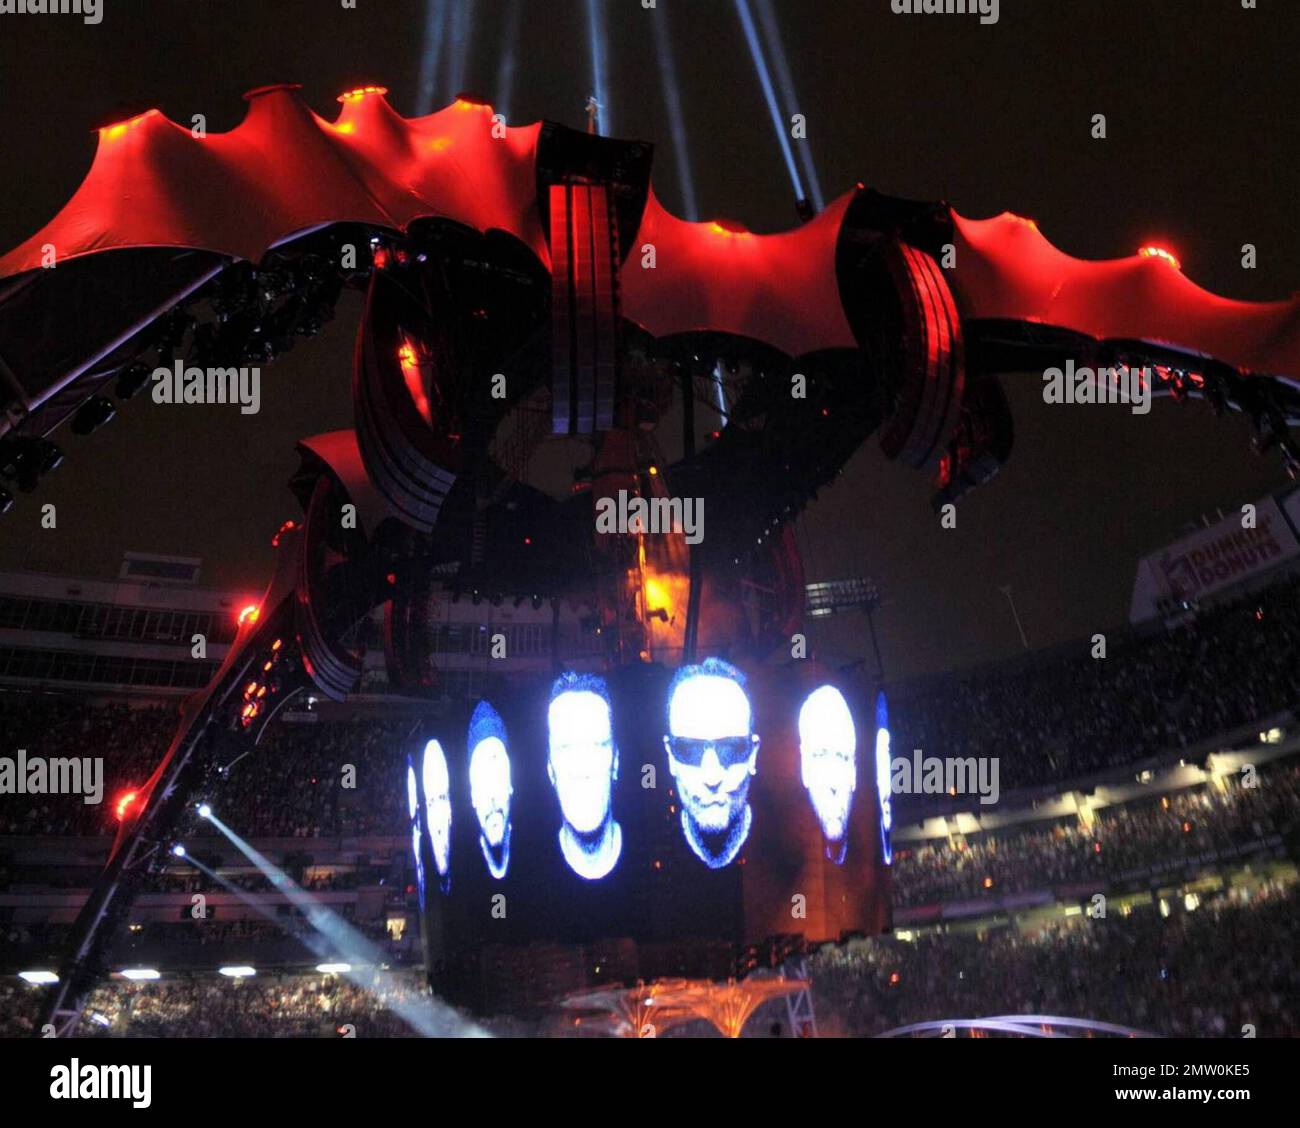 U2 performs live at Giants Stadium as part of their U2 360 Degree tour. New York, NY. 9/23/09. Stock Photo